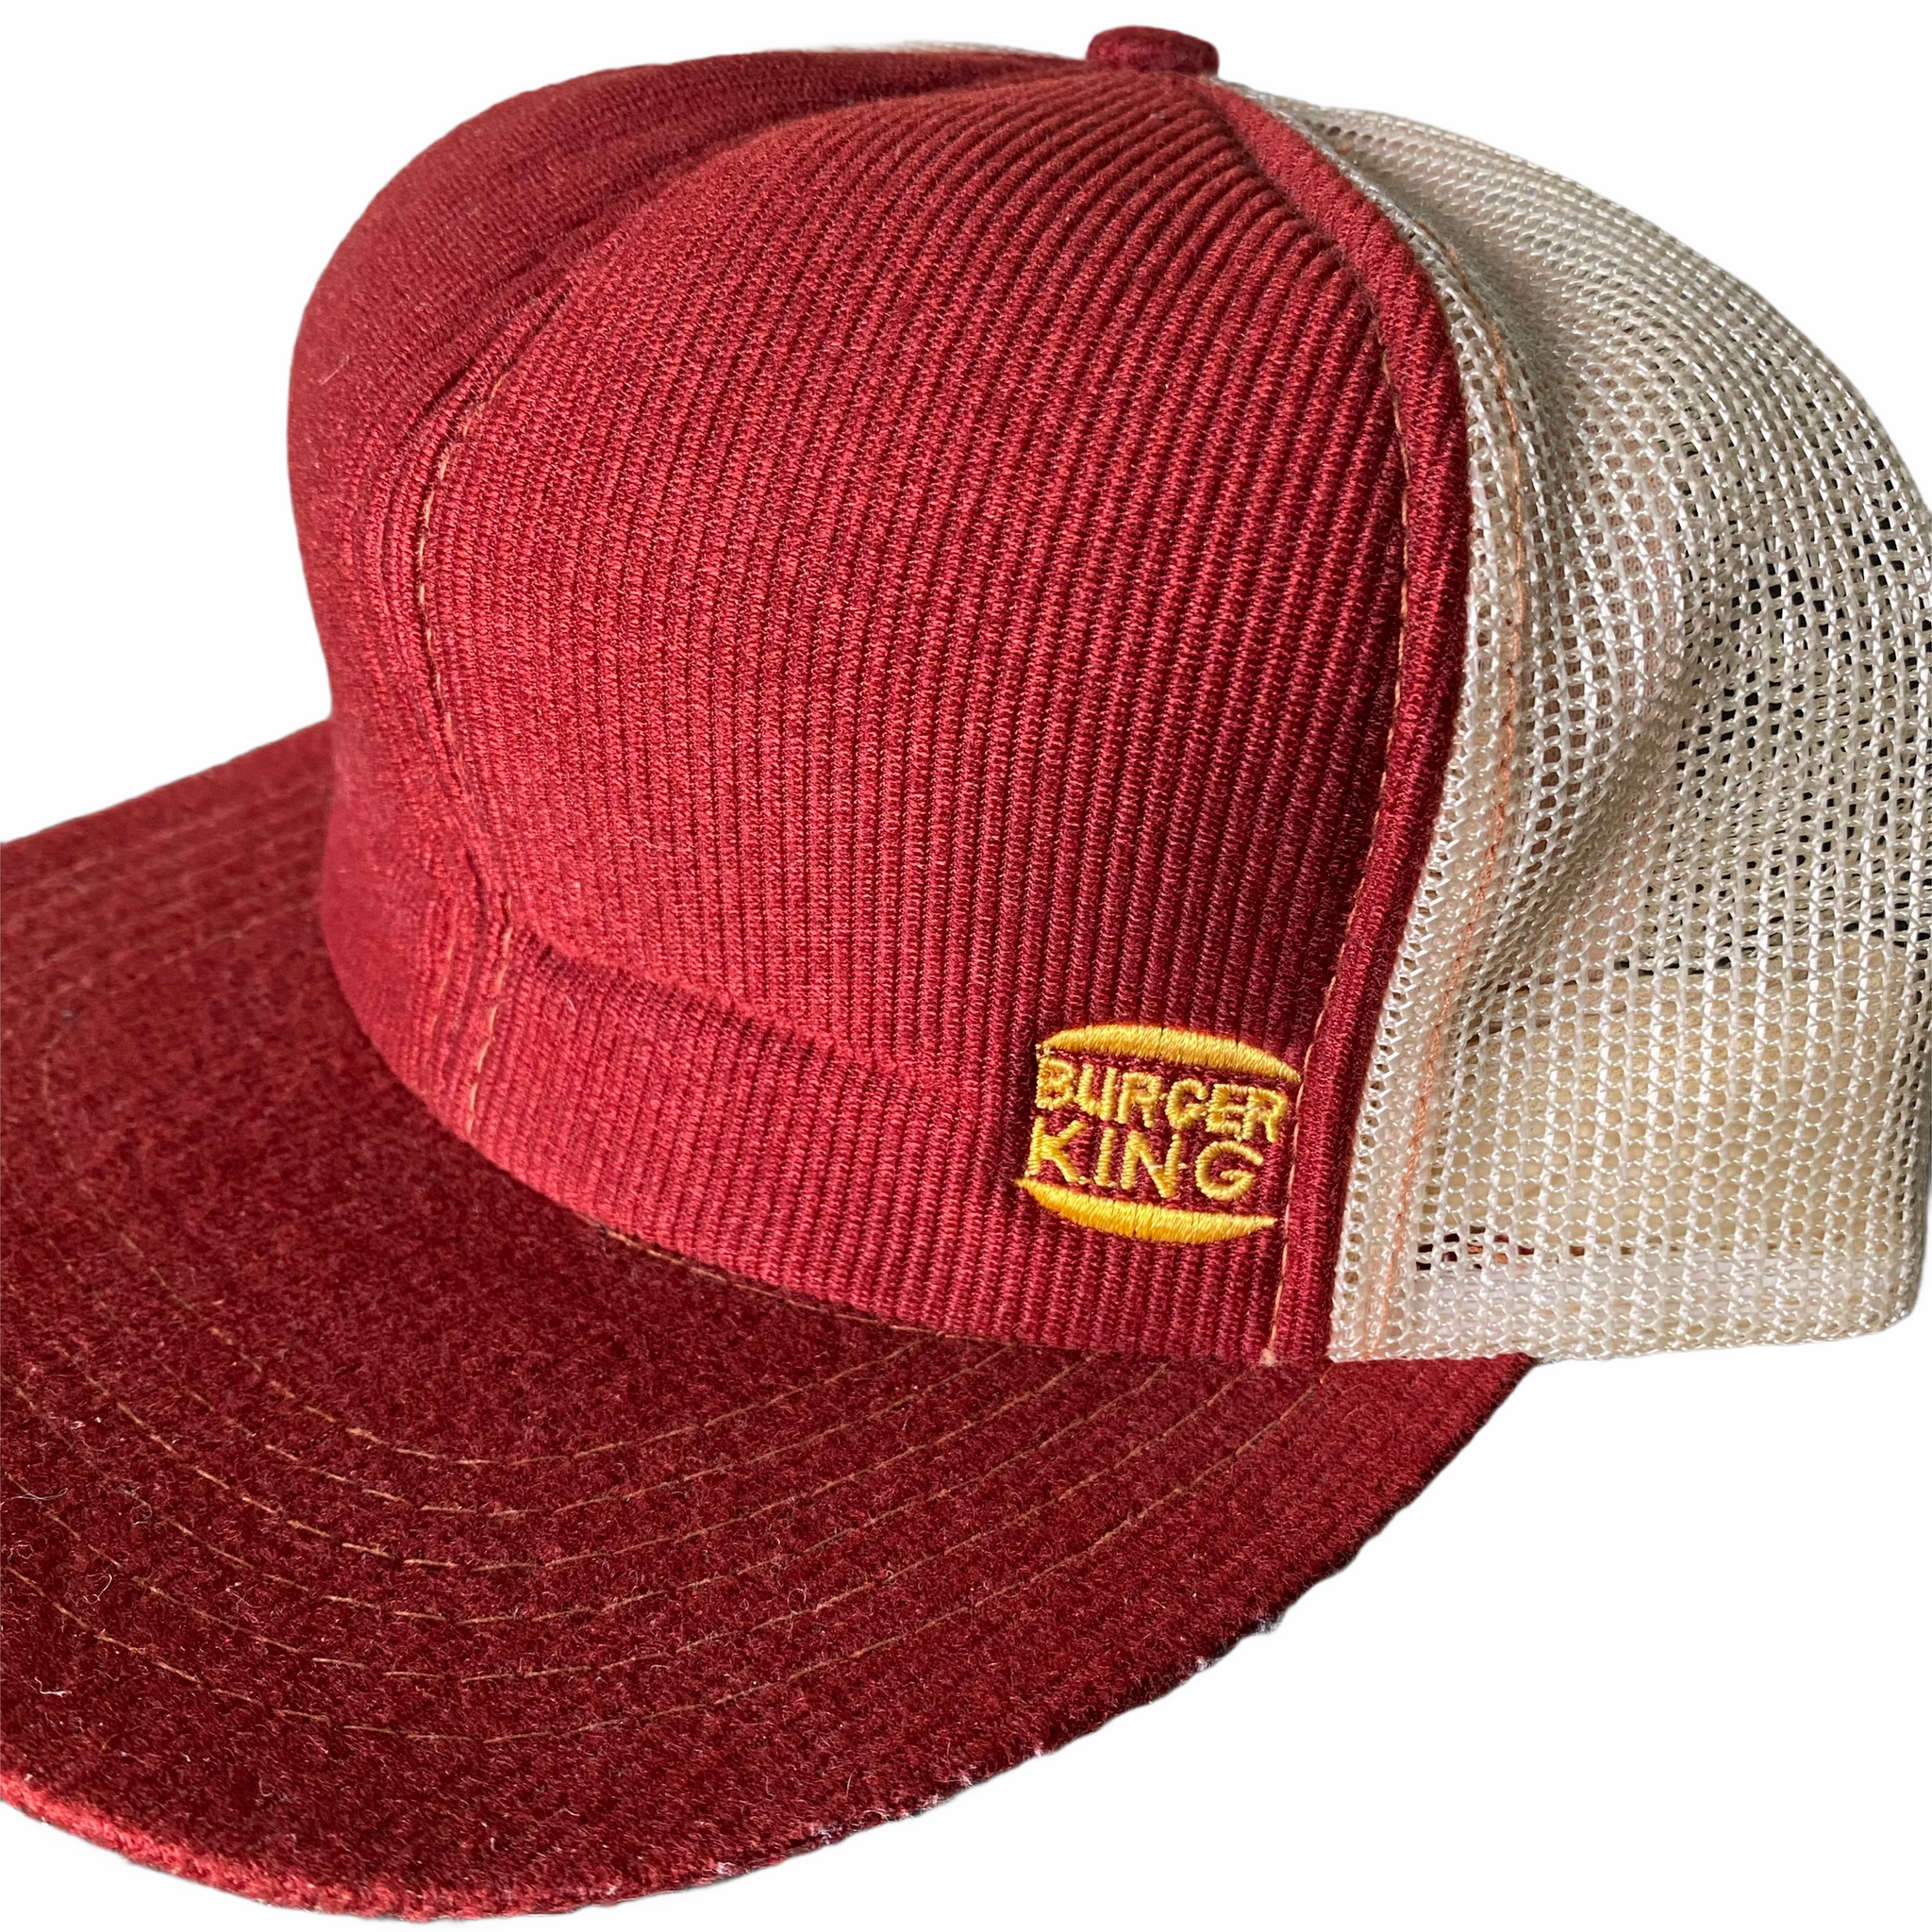 80s Burger king trucker hat